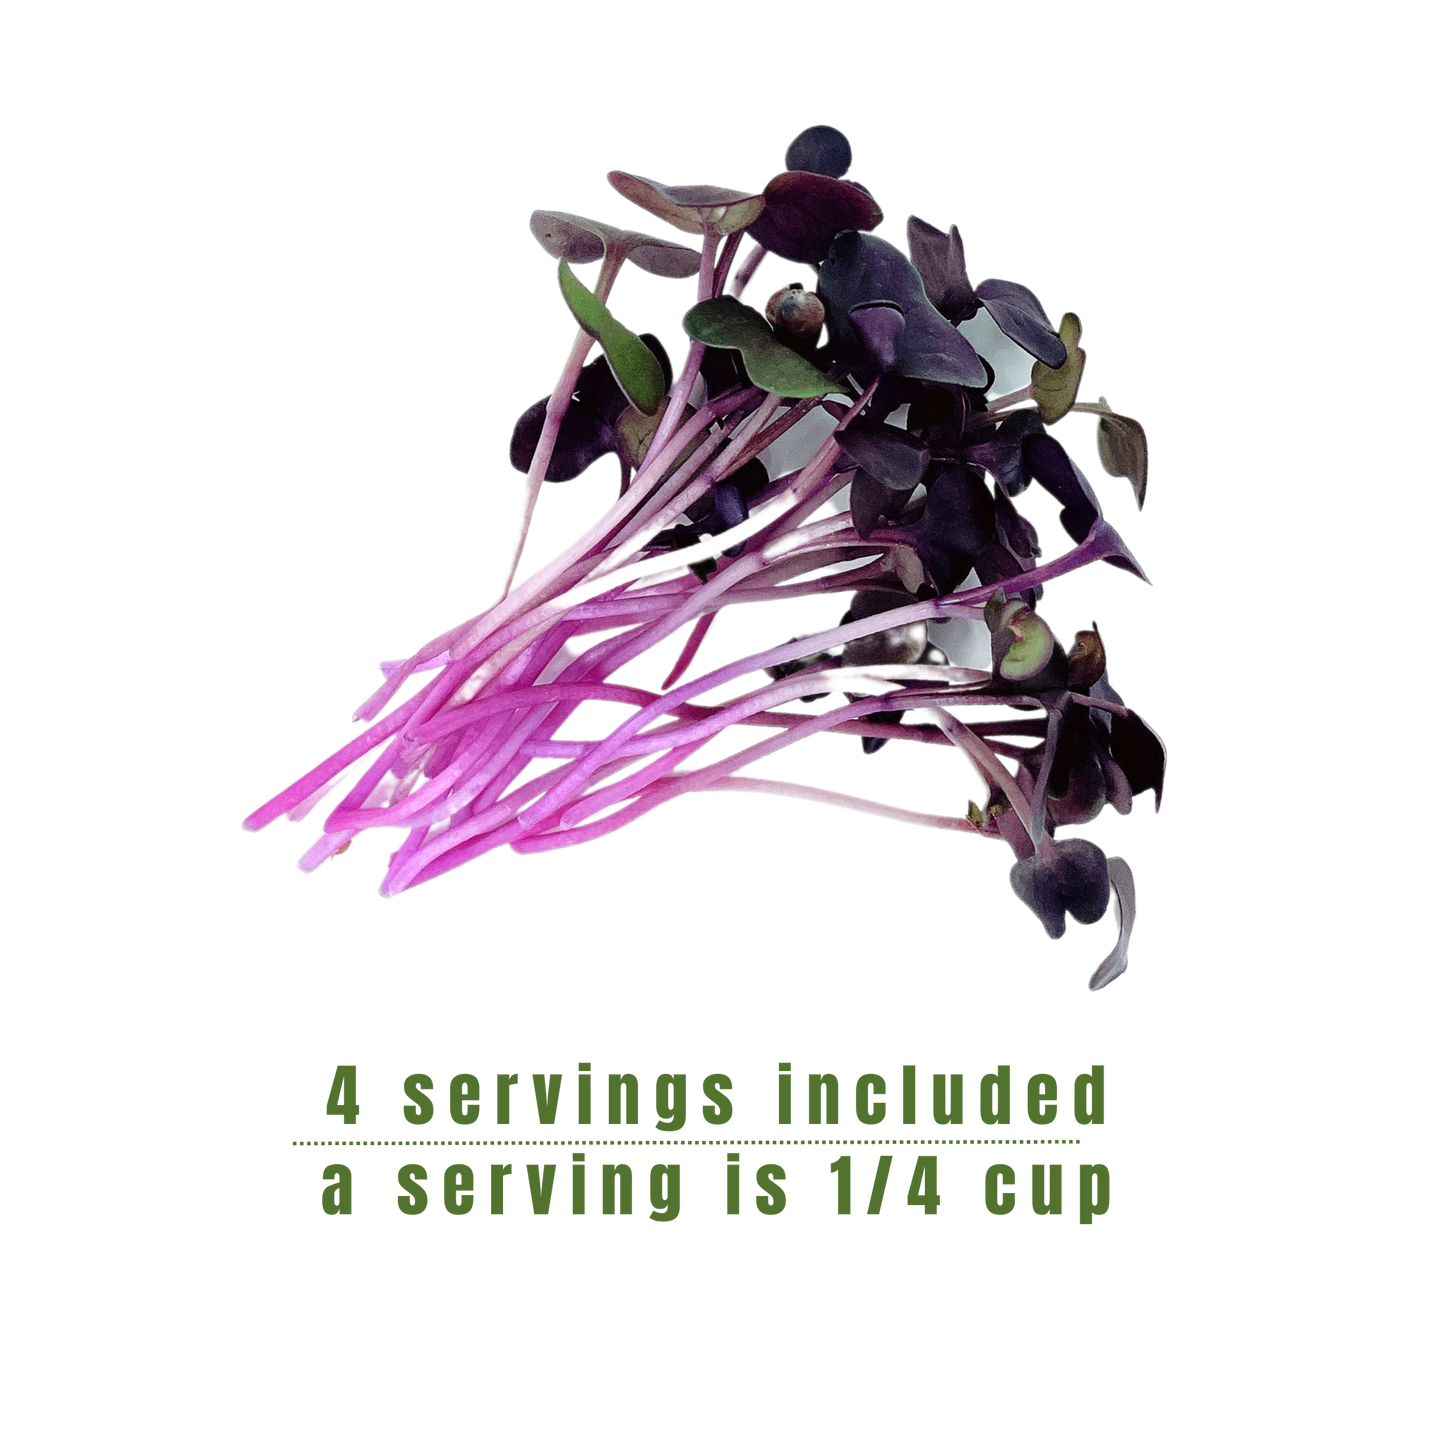 Purple Radish Microgreens